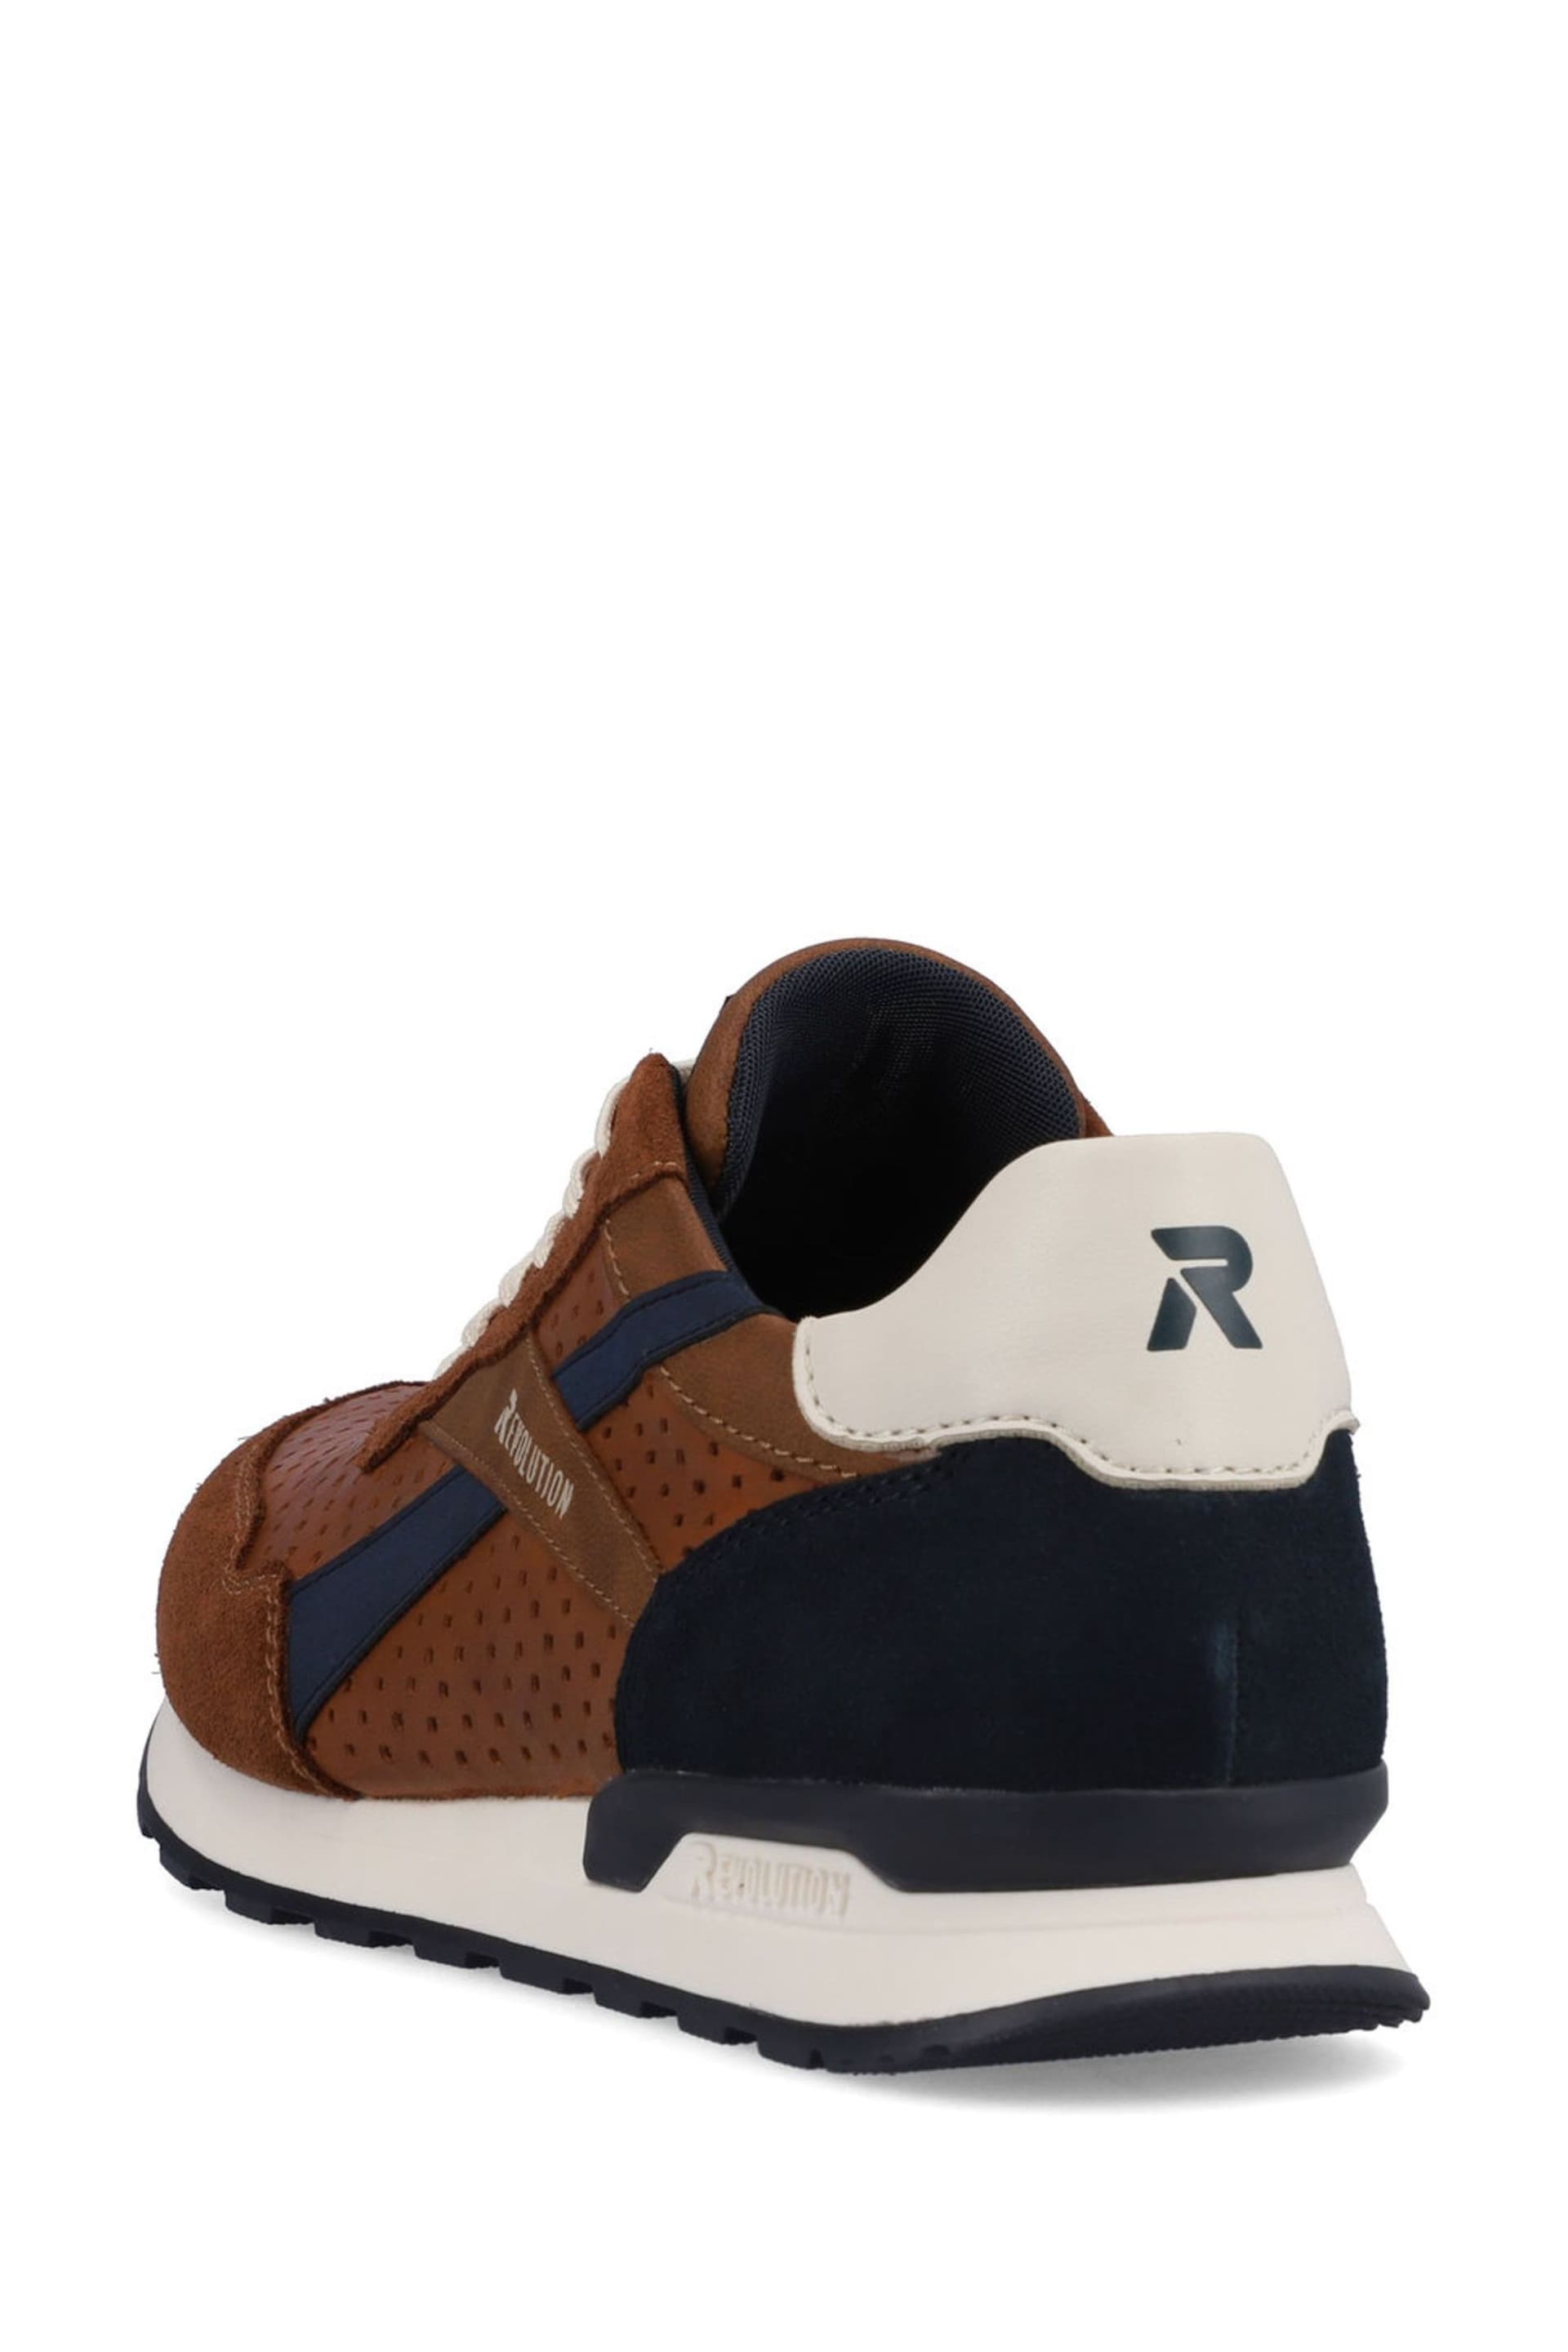 Rieker Mens Evolution Lace-Up Shoes - Image 4 of 9